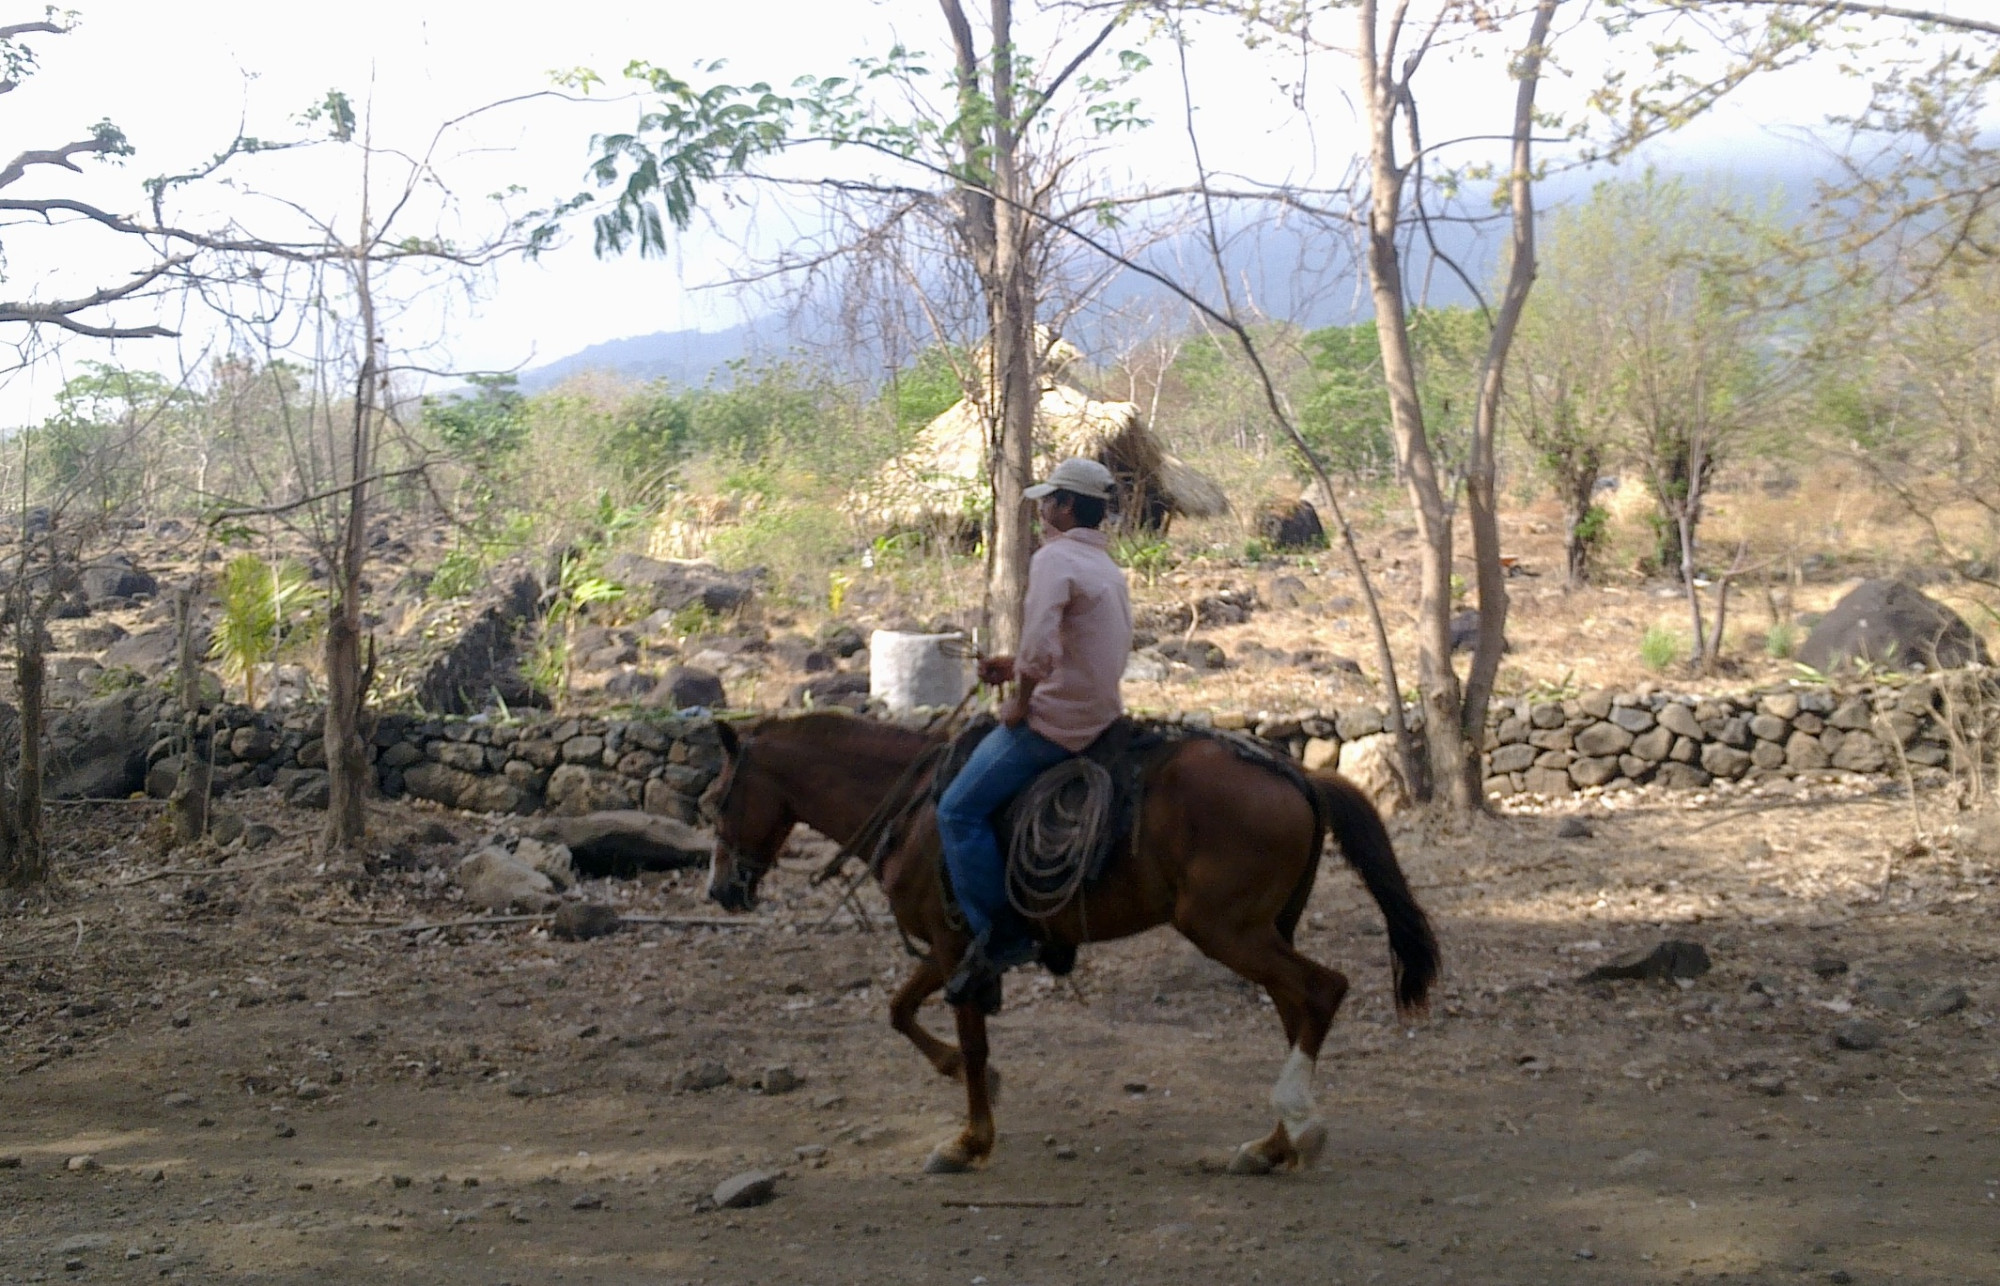 cowboy («El Jardin de La Vida»,<br/>
Ometepe Island, Nicaragua)